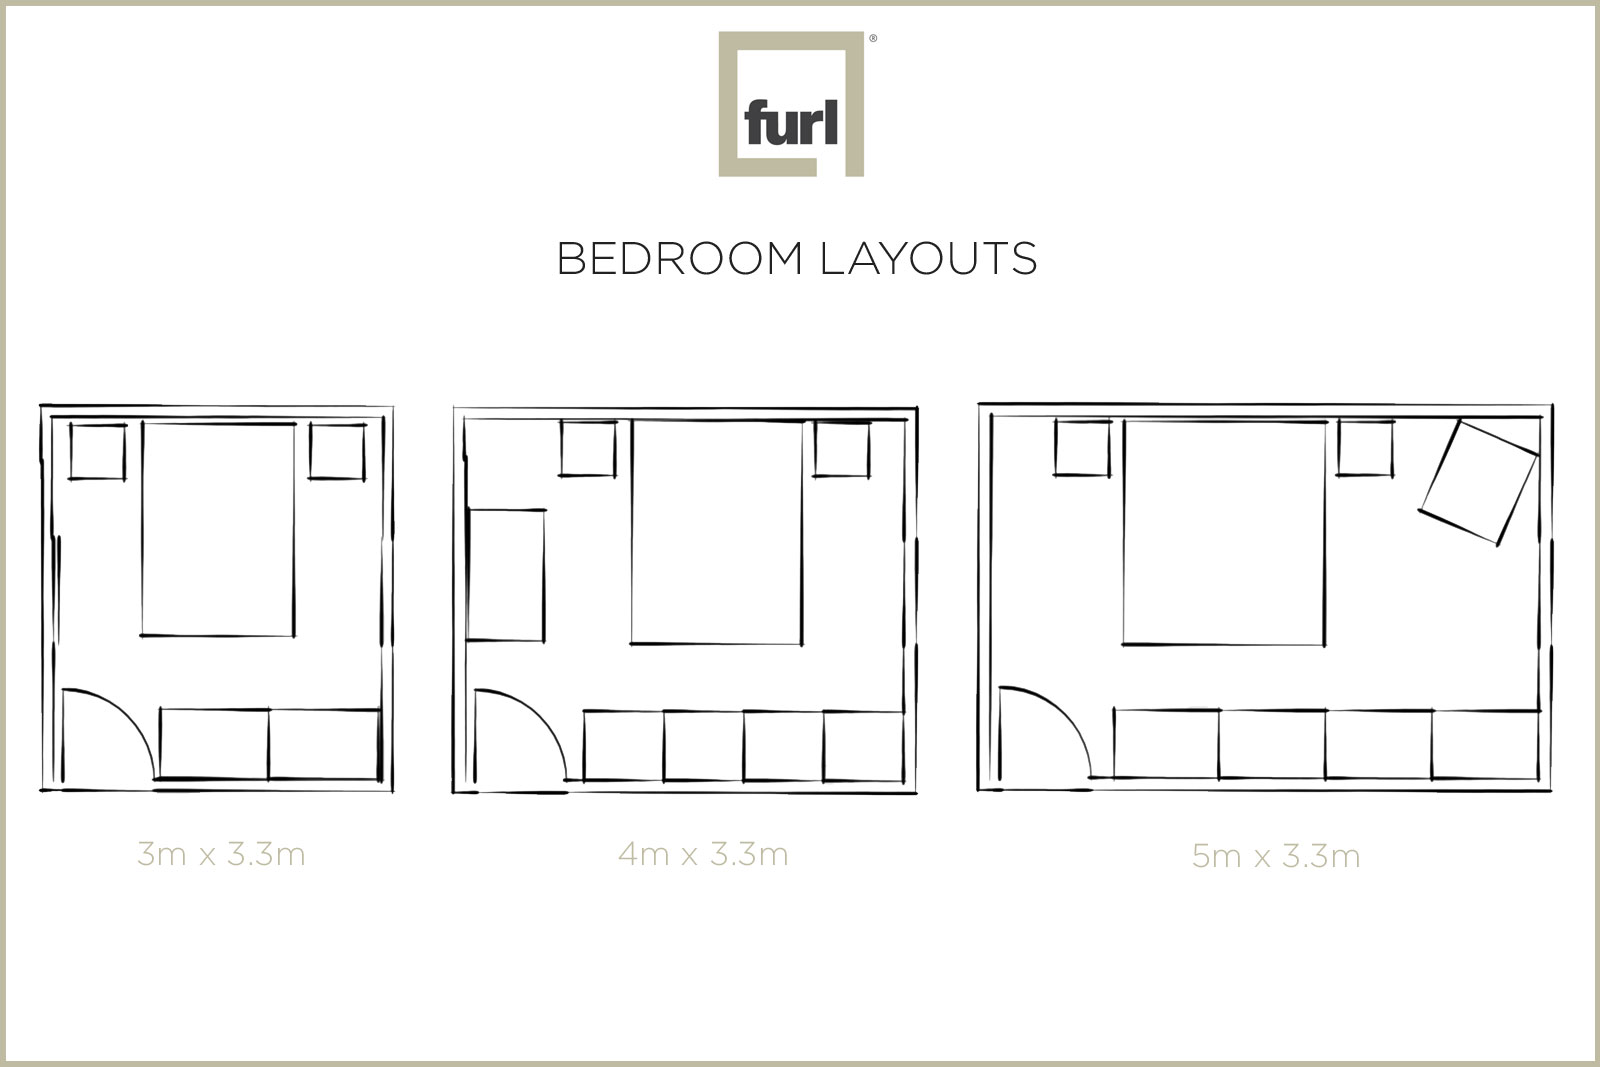 How to arrange a bedroom layout   Furl Blog